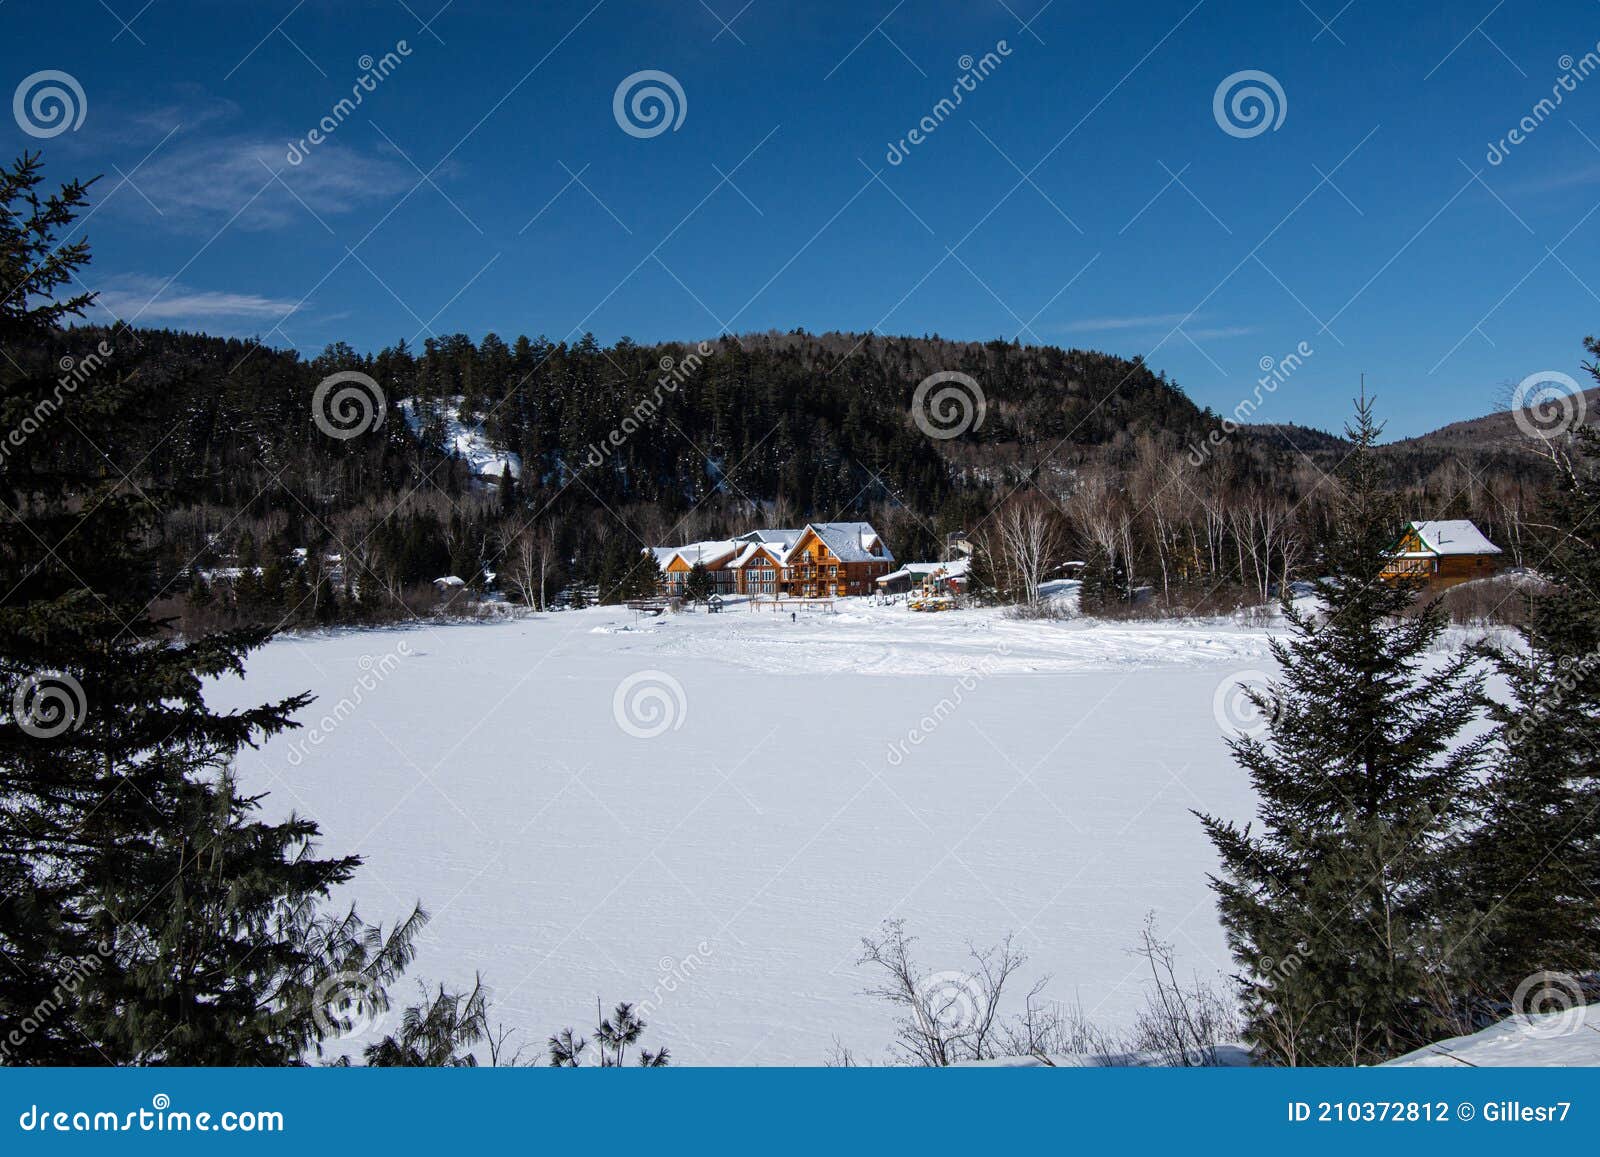 nice lake, winter landsacape on the countryside